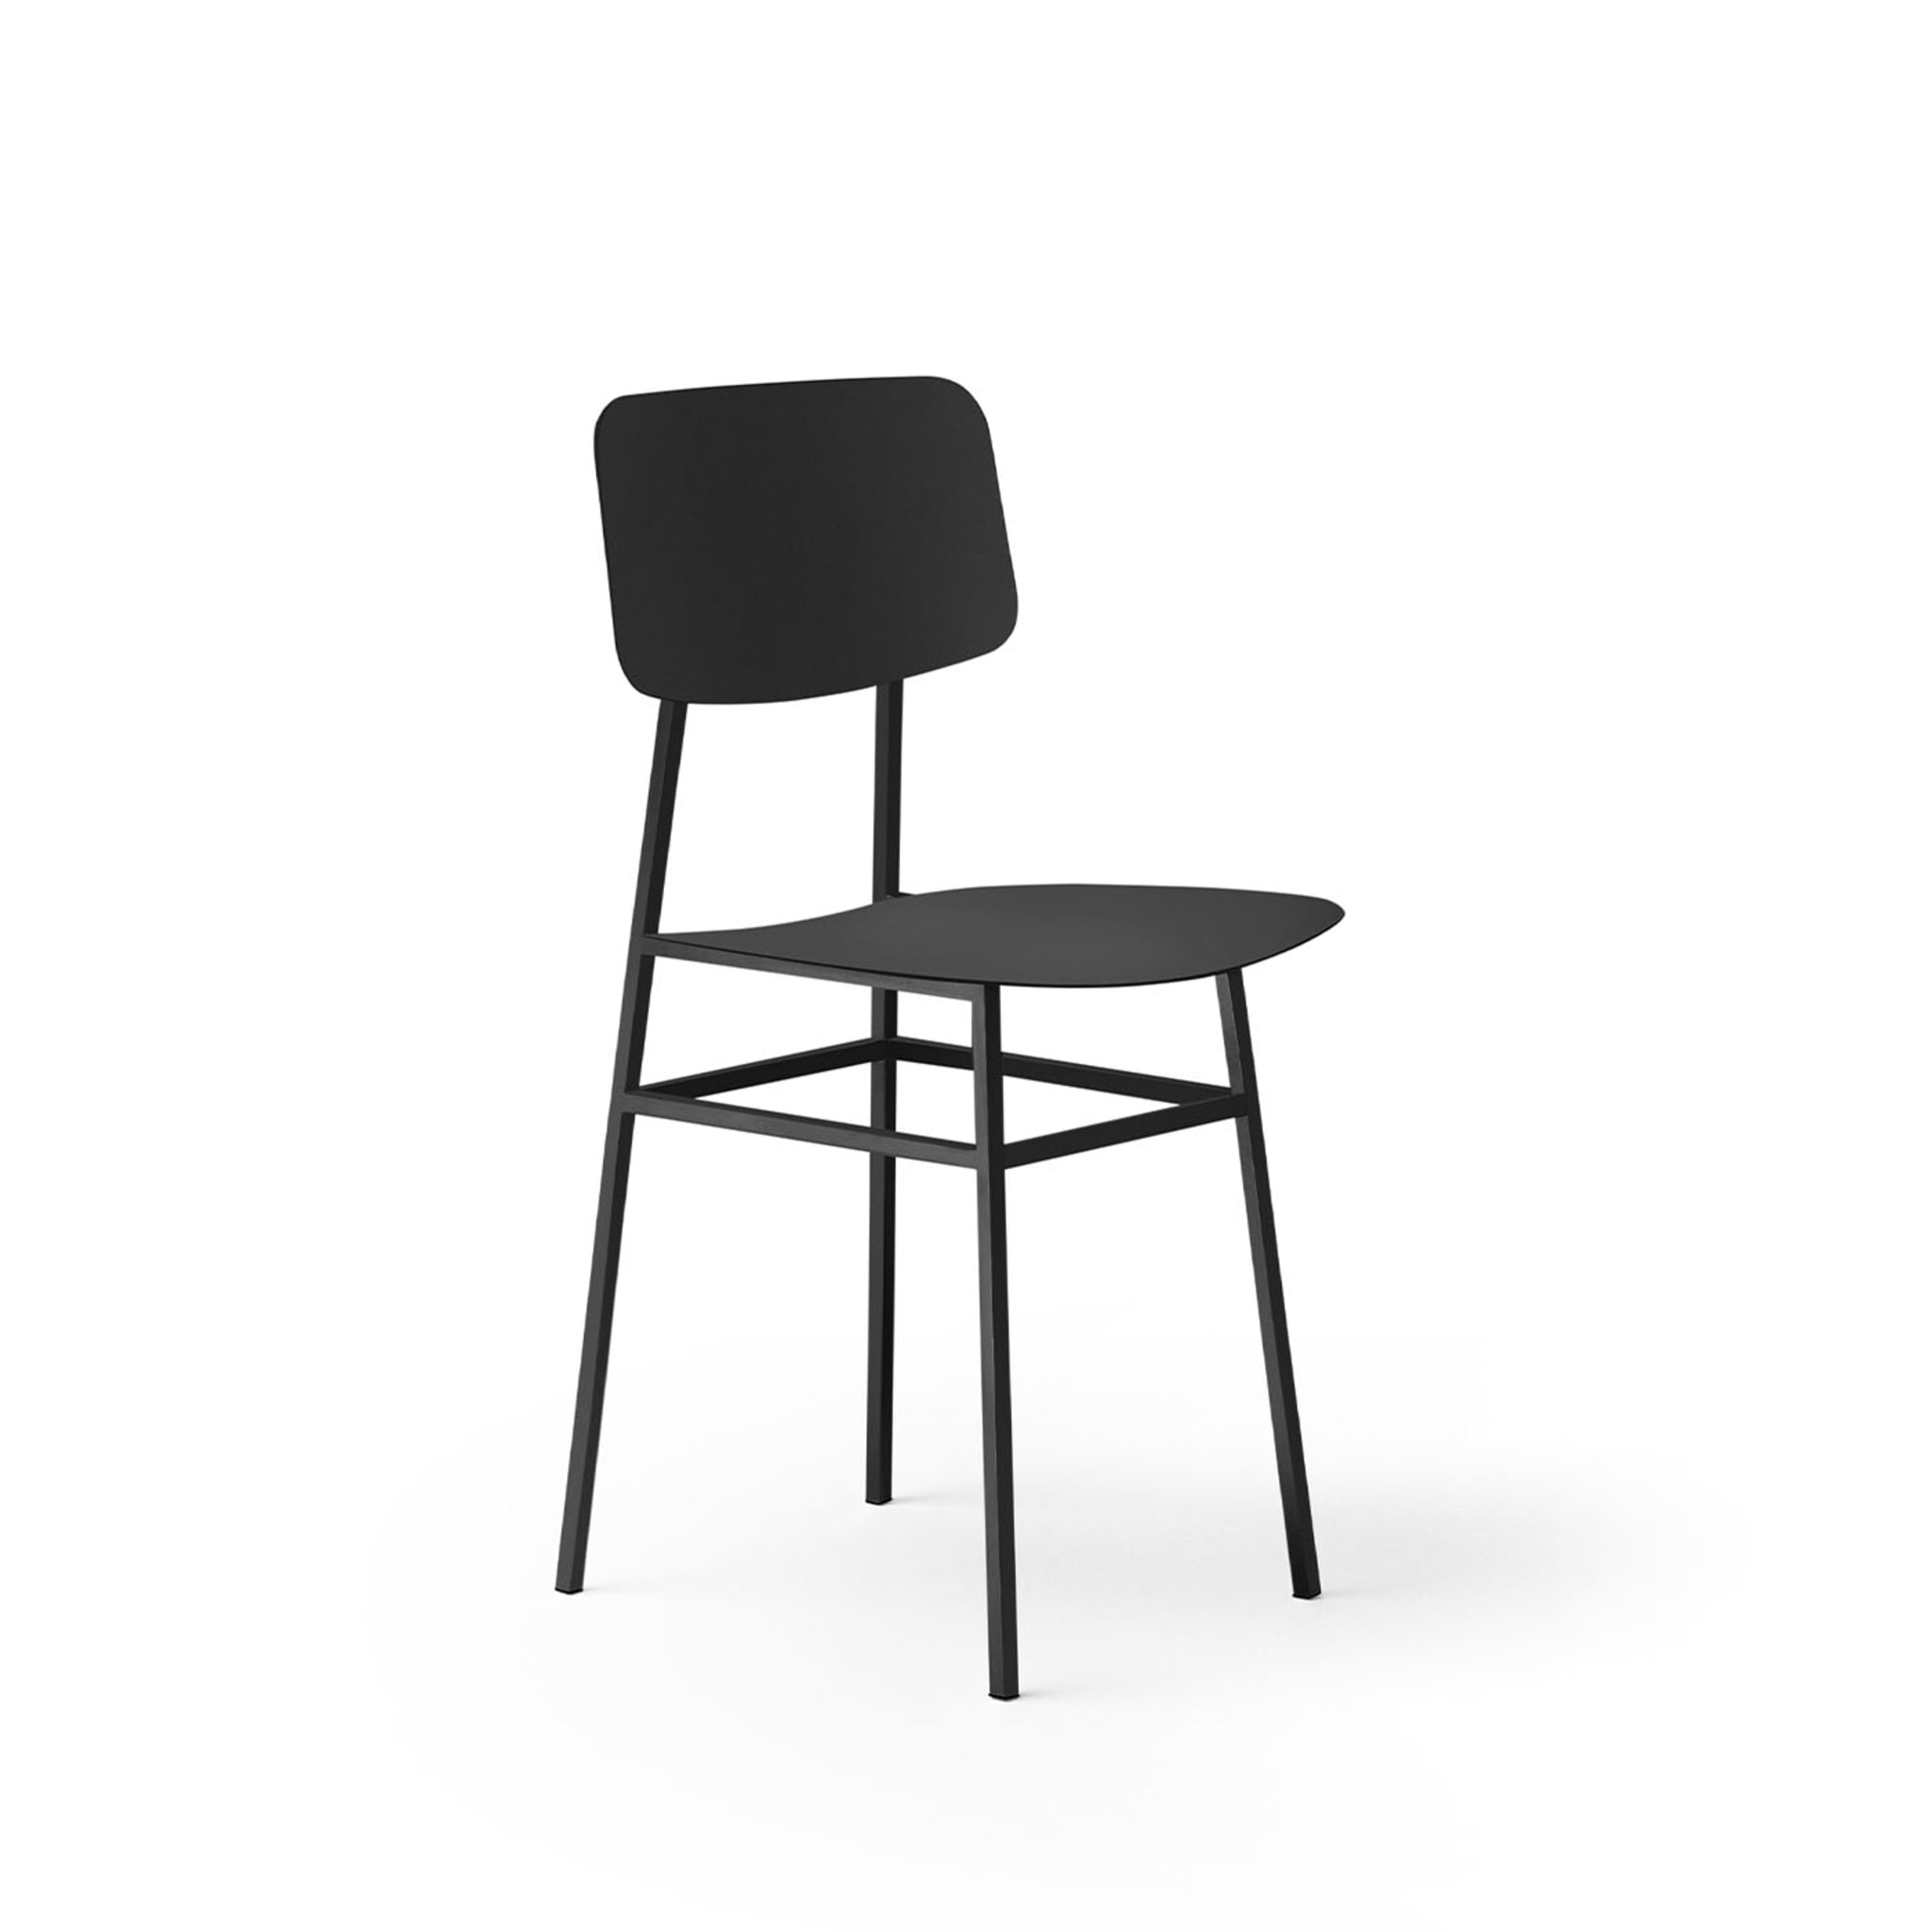 Miami Black Chair by Nika Zupanc - Alternative Ansicht 1